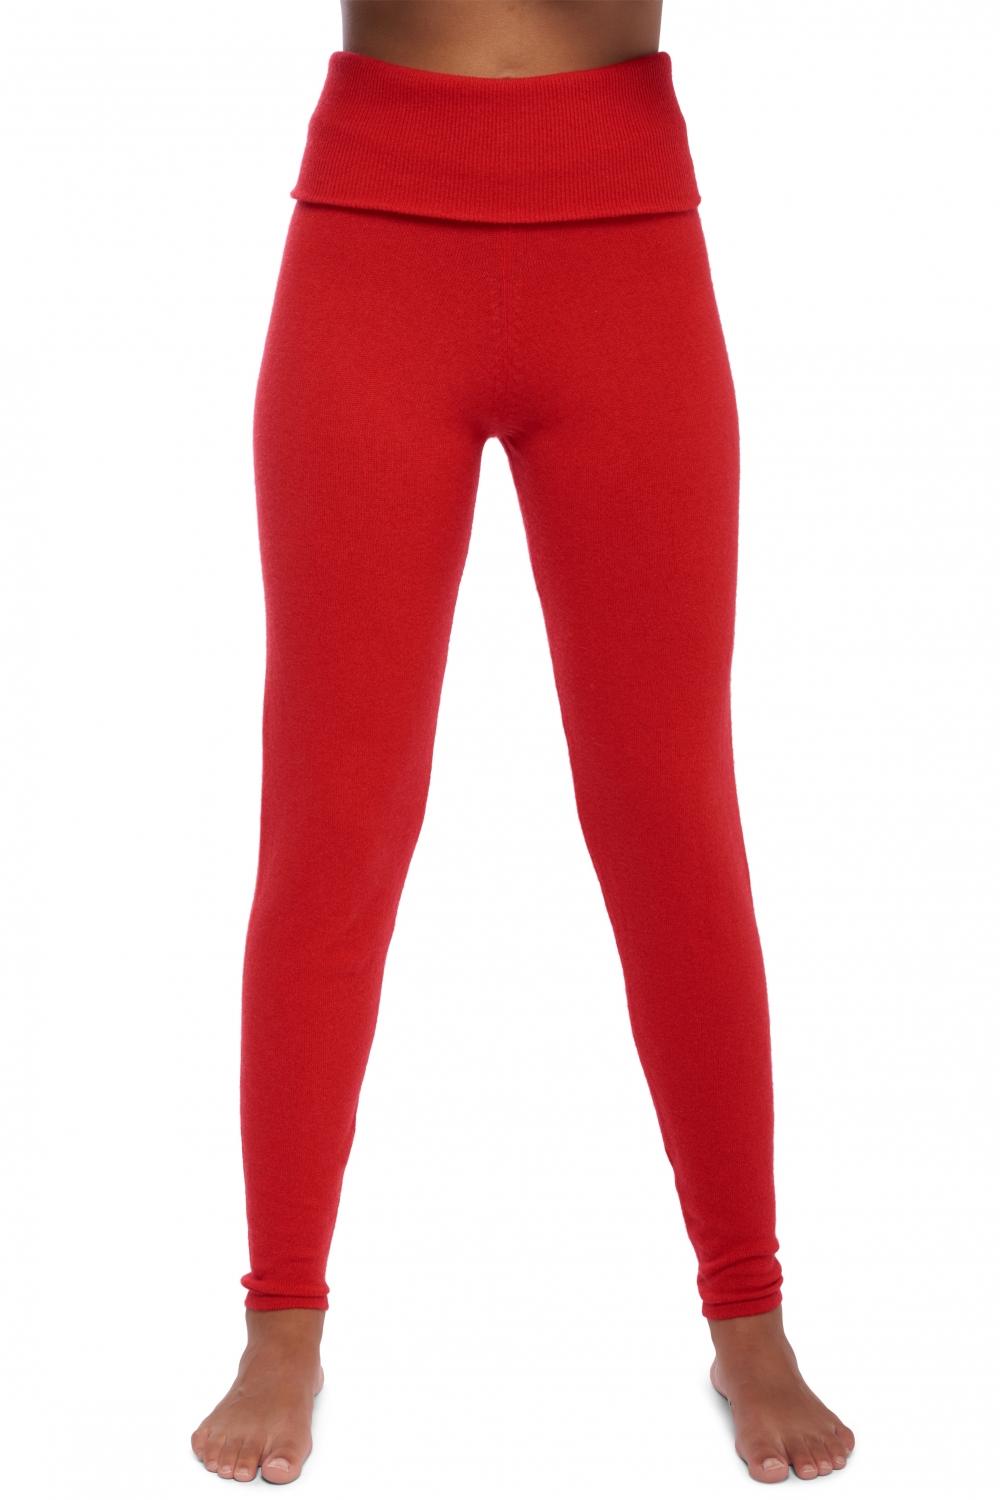 Cashmere accessoires shirley rouge 4xl